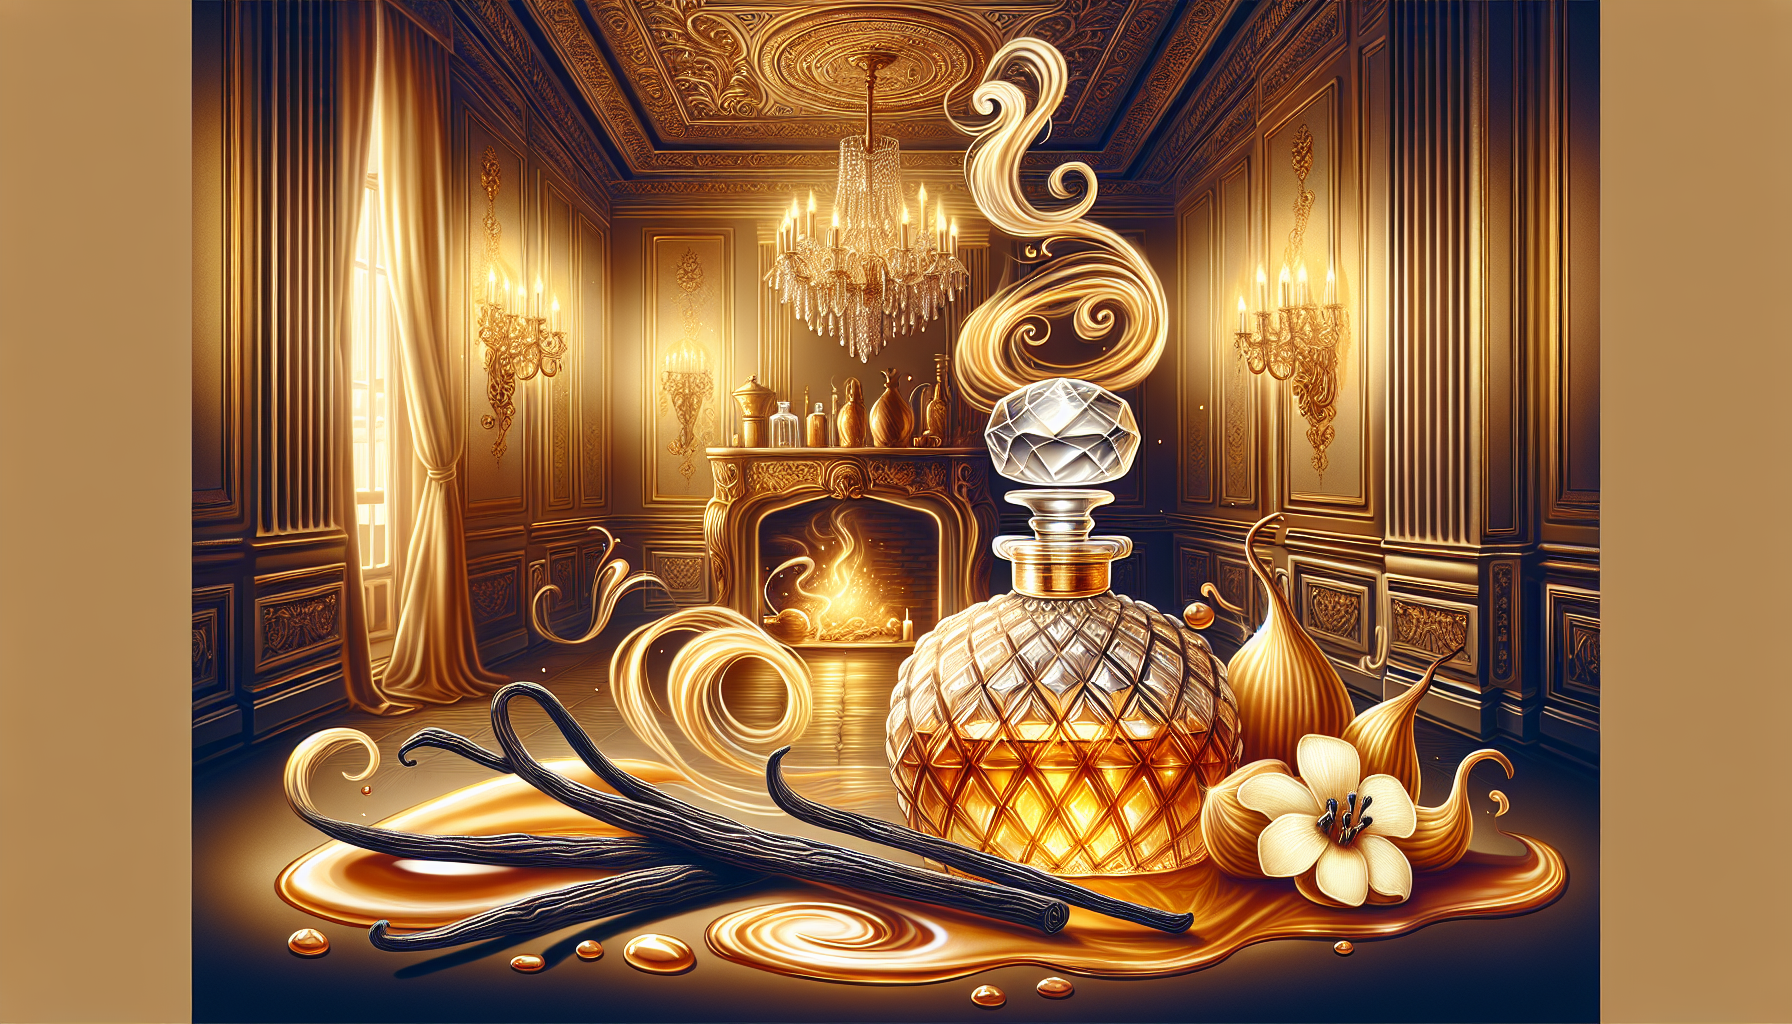 Luxurious vanilla caramel and golden amber aroma